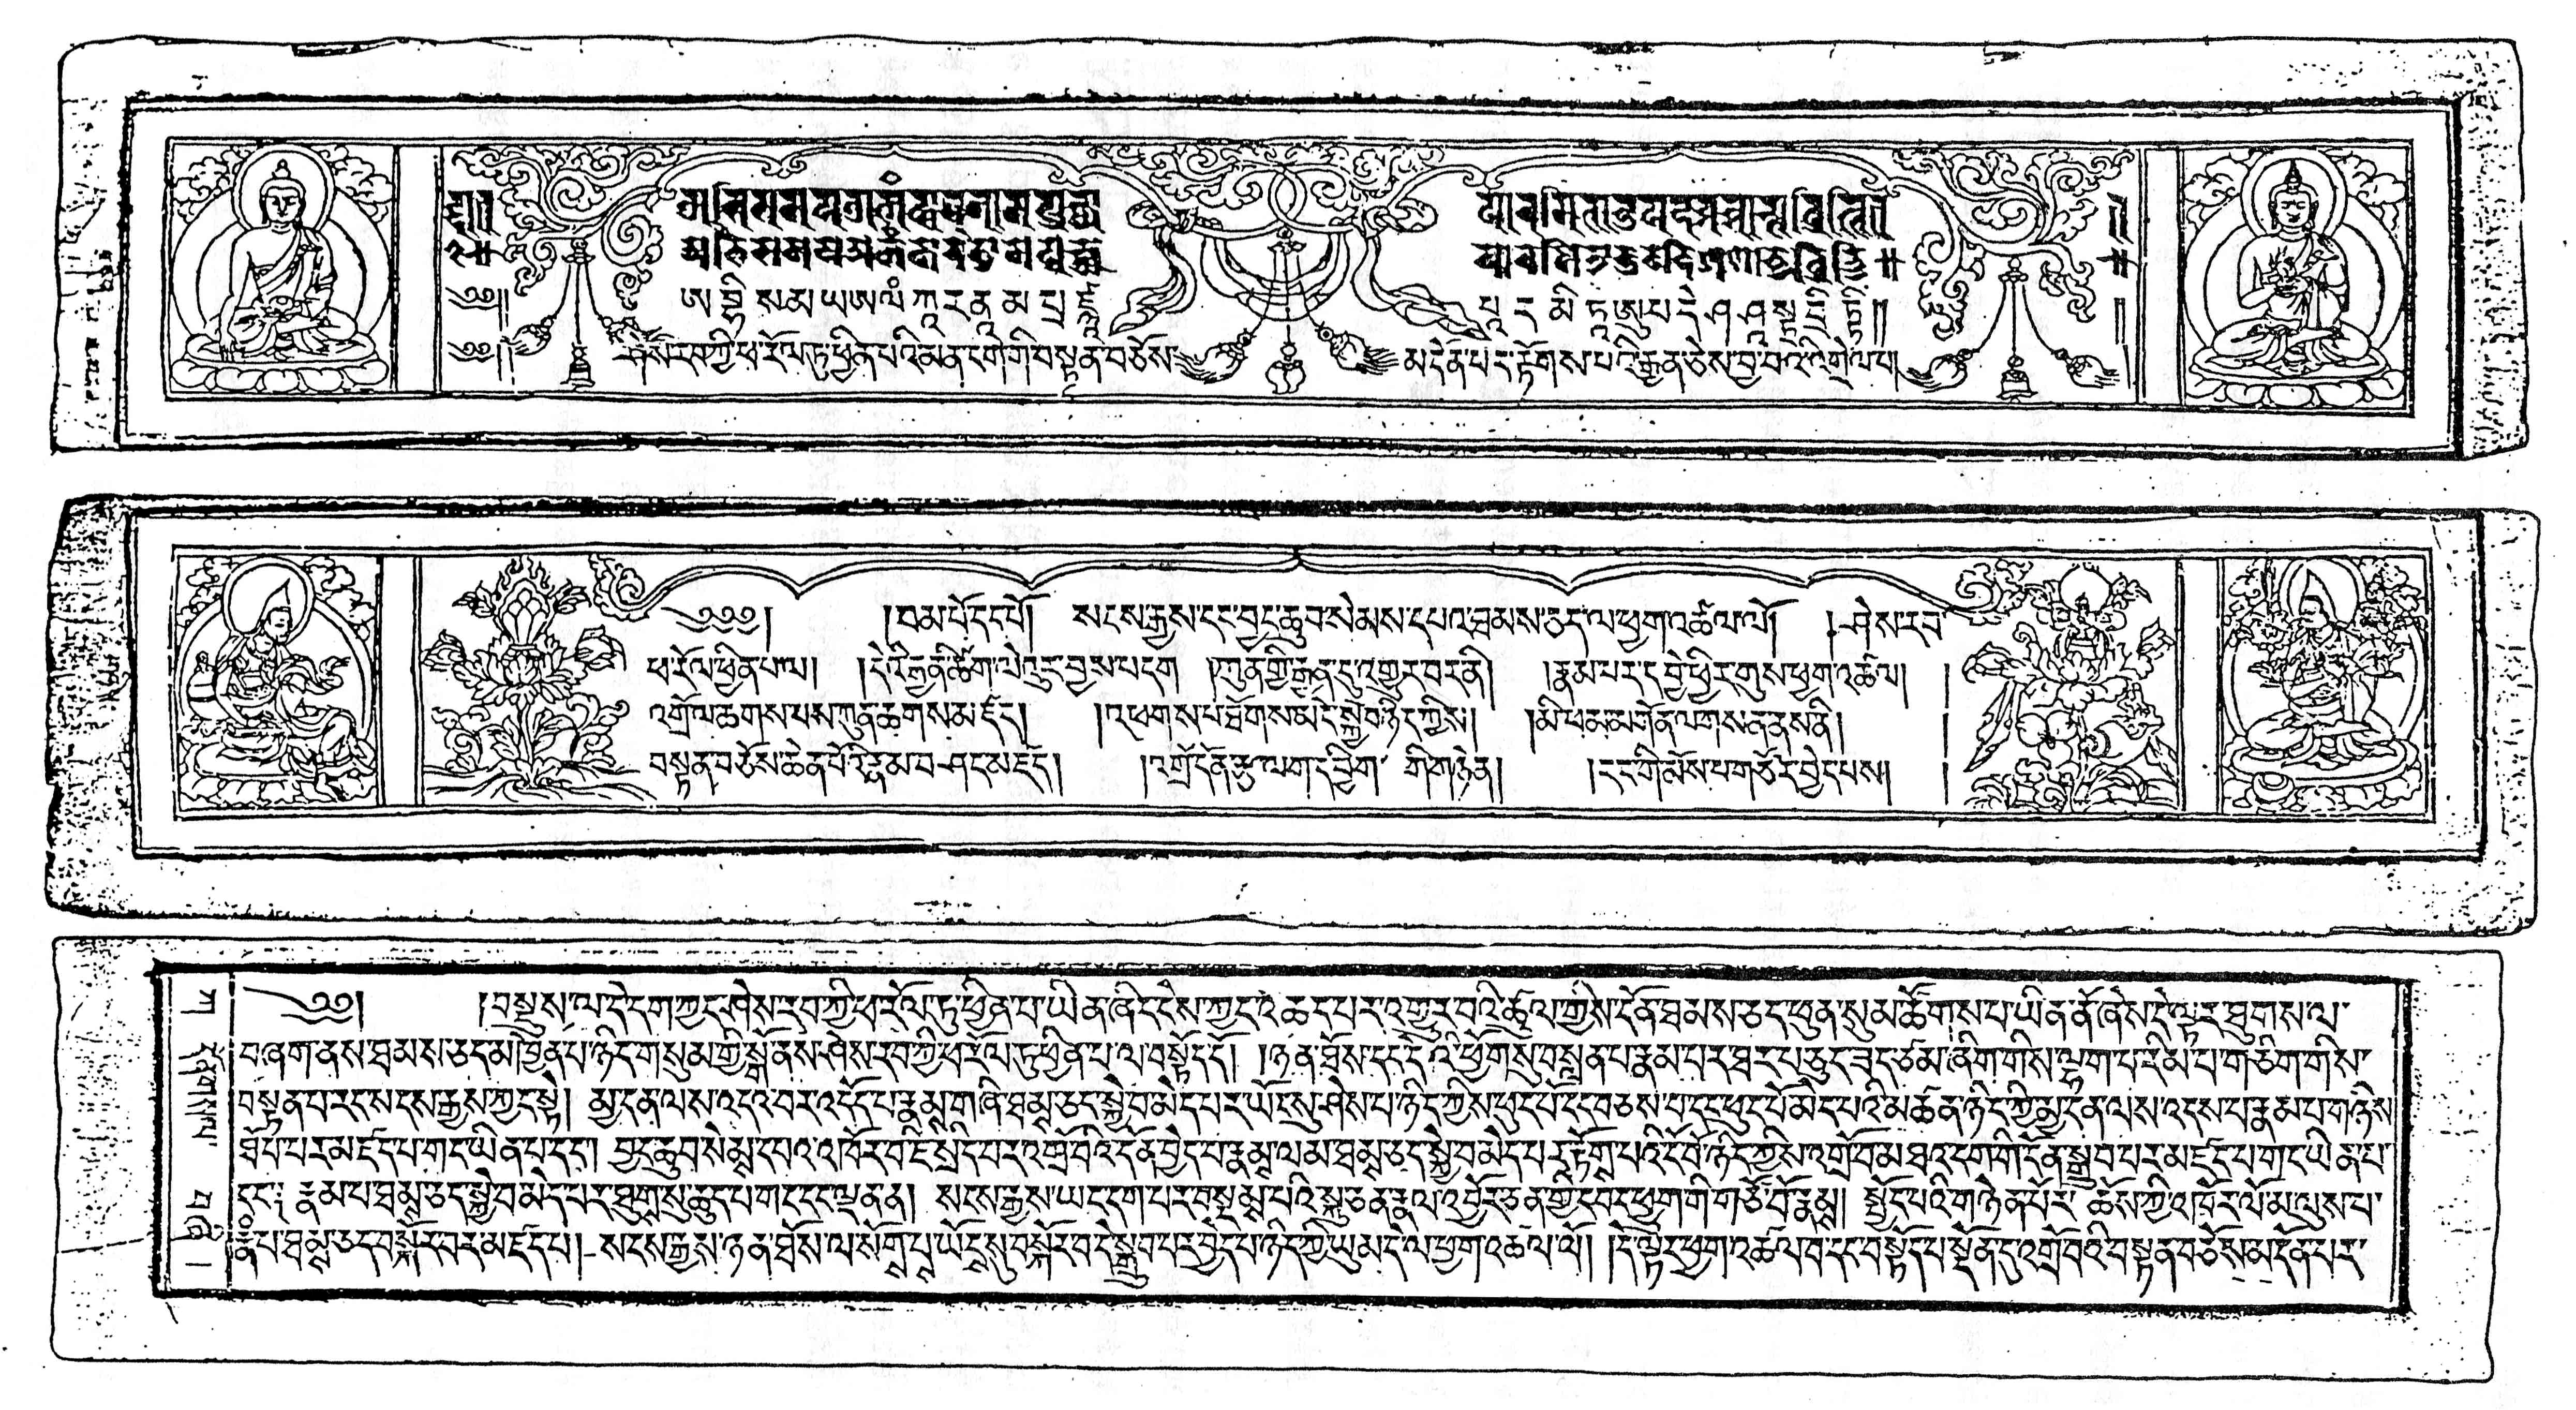 Fadccal nyomtatott tibeti knyv els oldala ucsen rssal